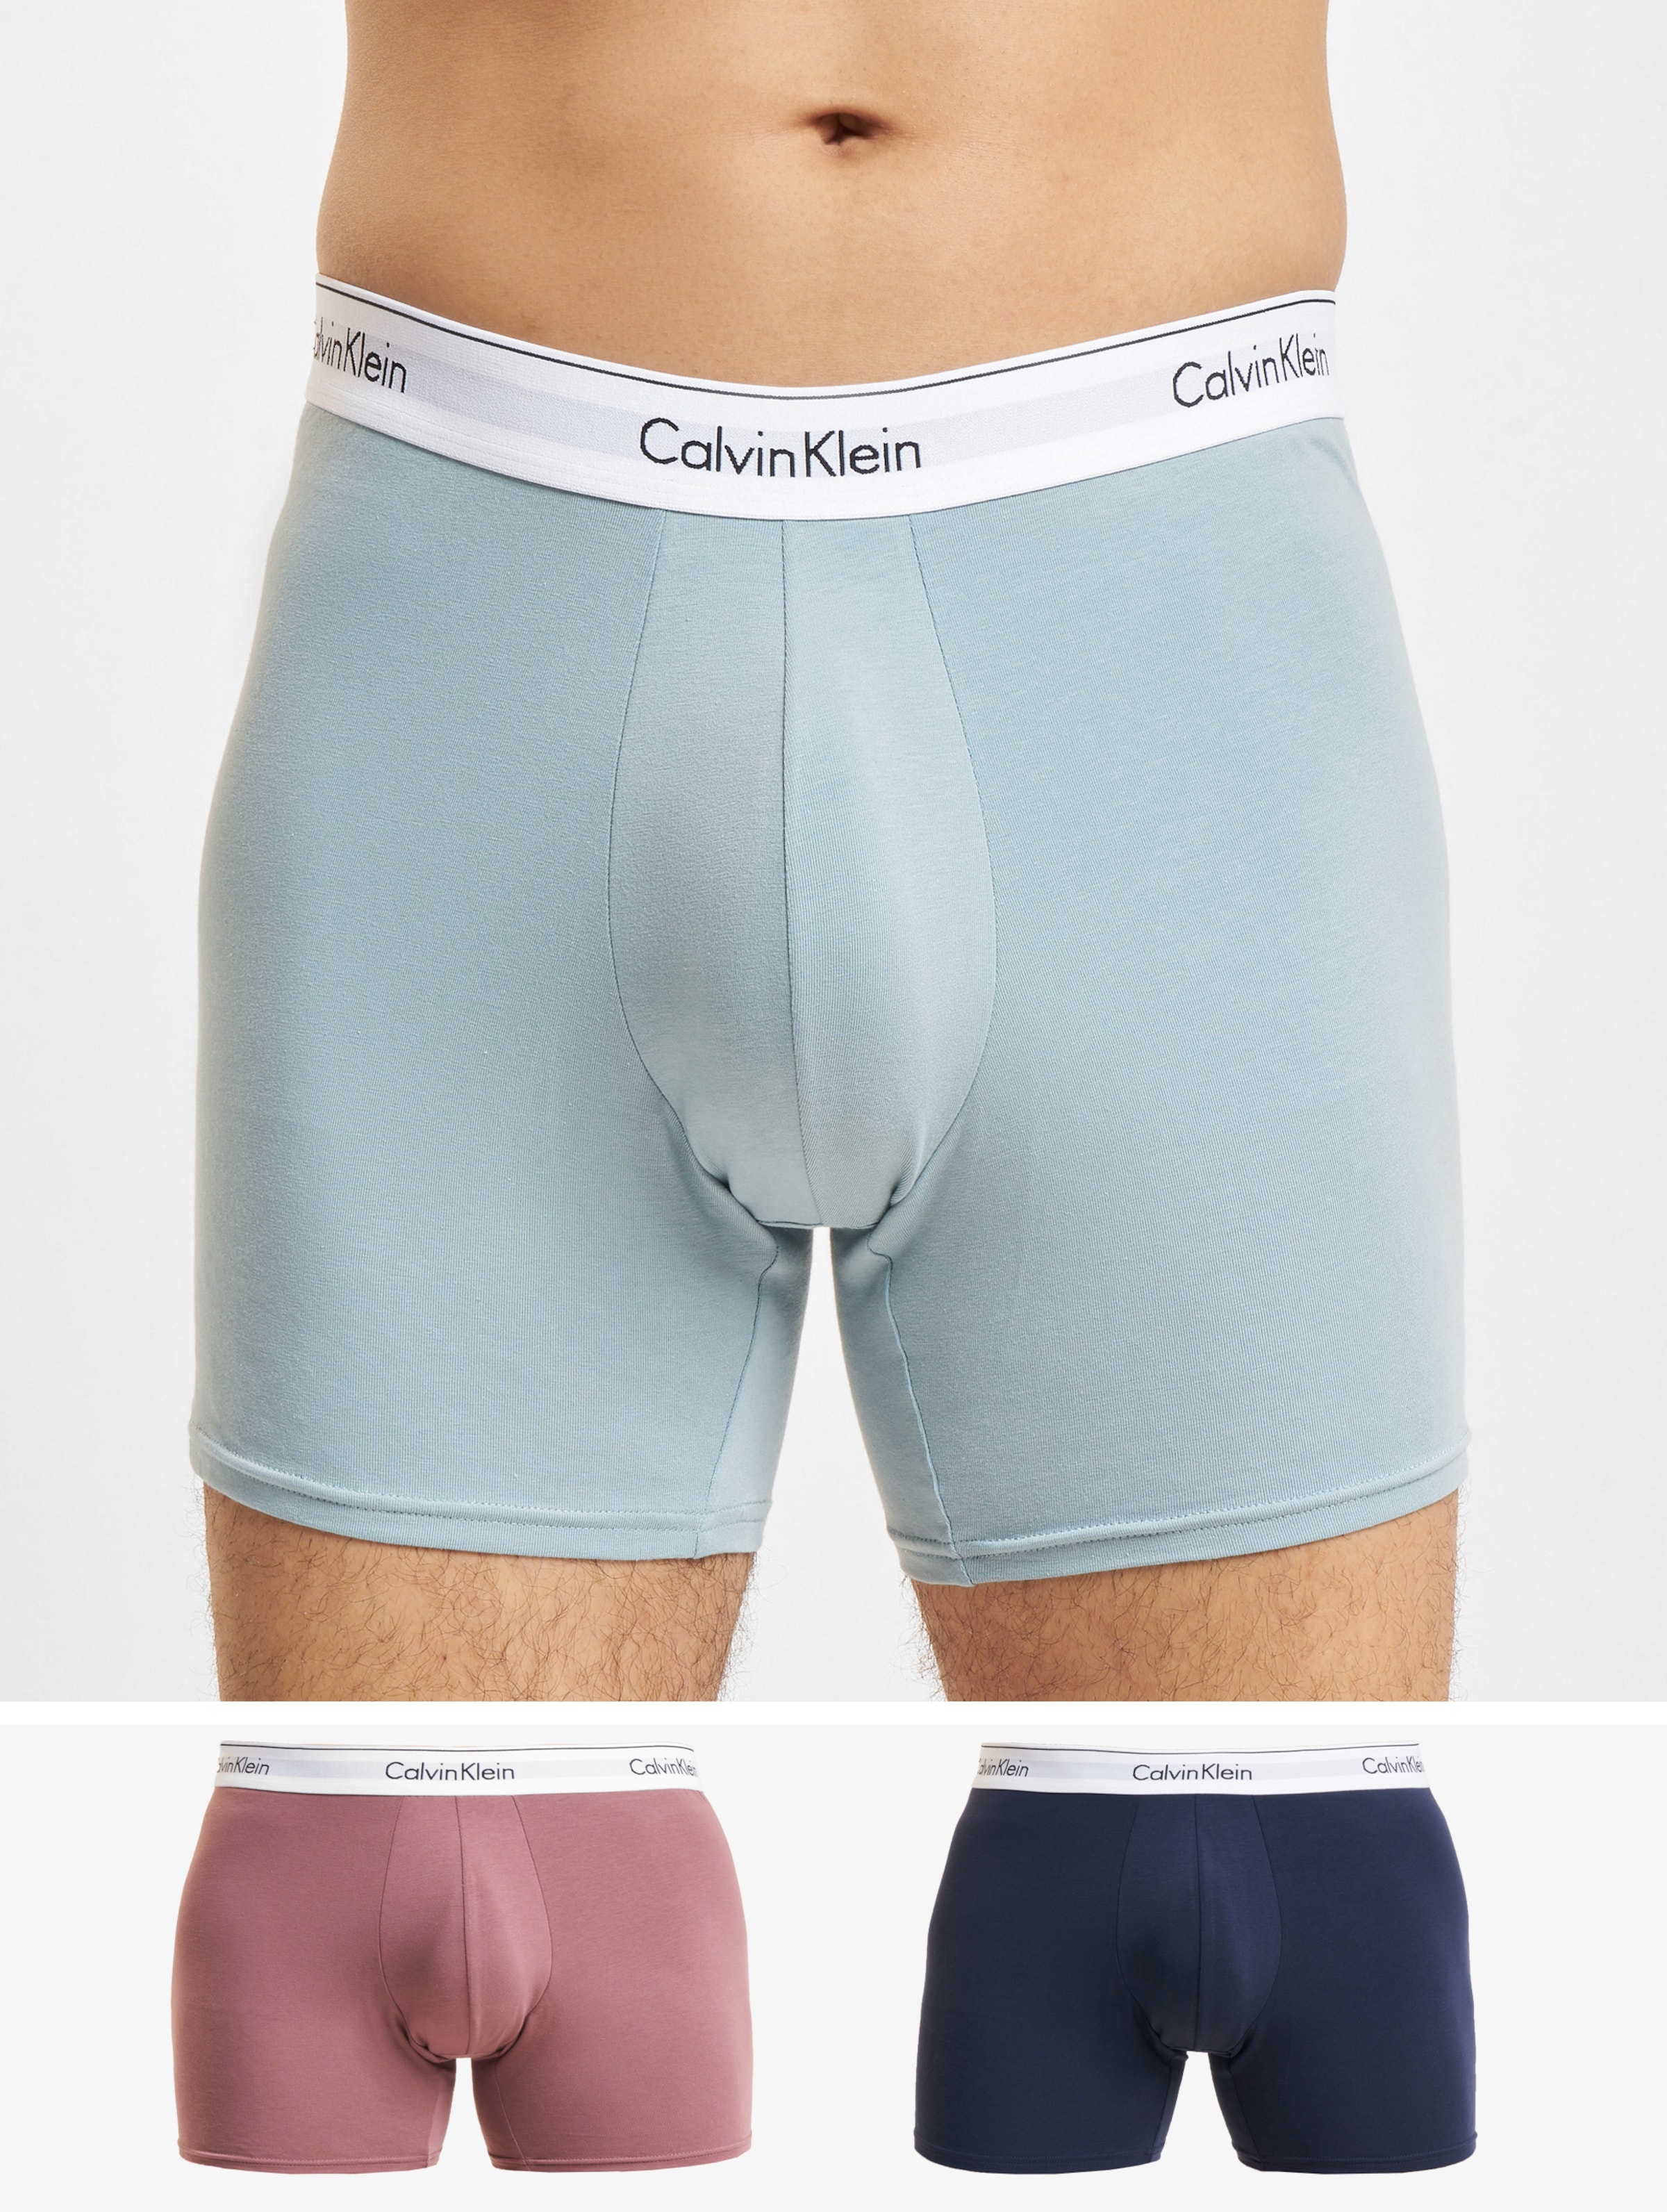 Calvin Klein Brief 3 Pack Boxershorts Männer,Unisex op kleur kleurrijk, Maat XL